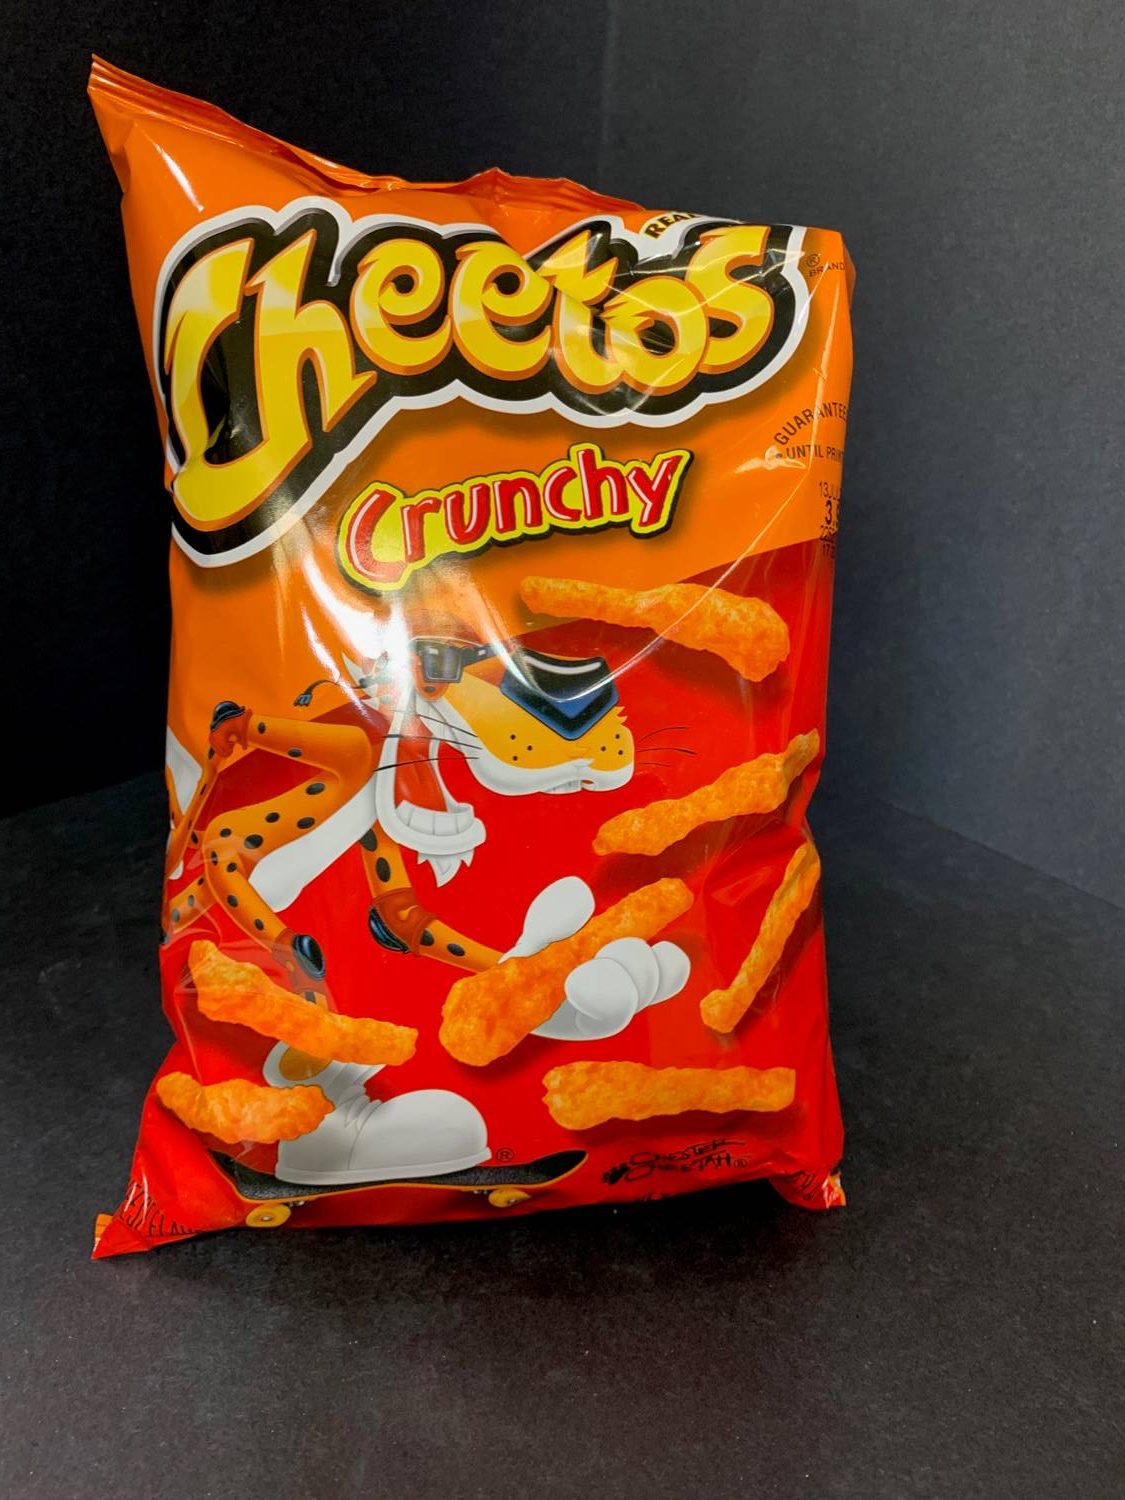 Cheetos Crunchy Cheese Flavored Snacks 2 oz. - 64/Case